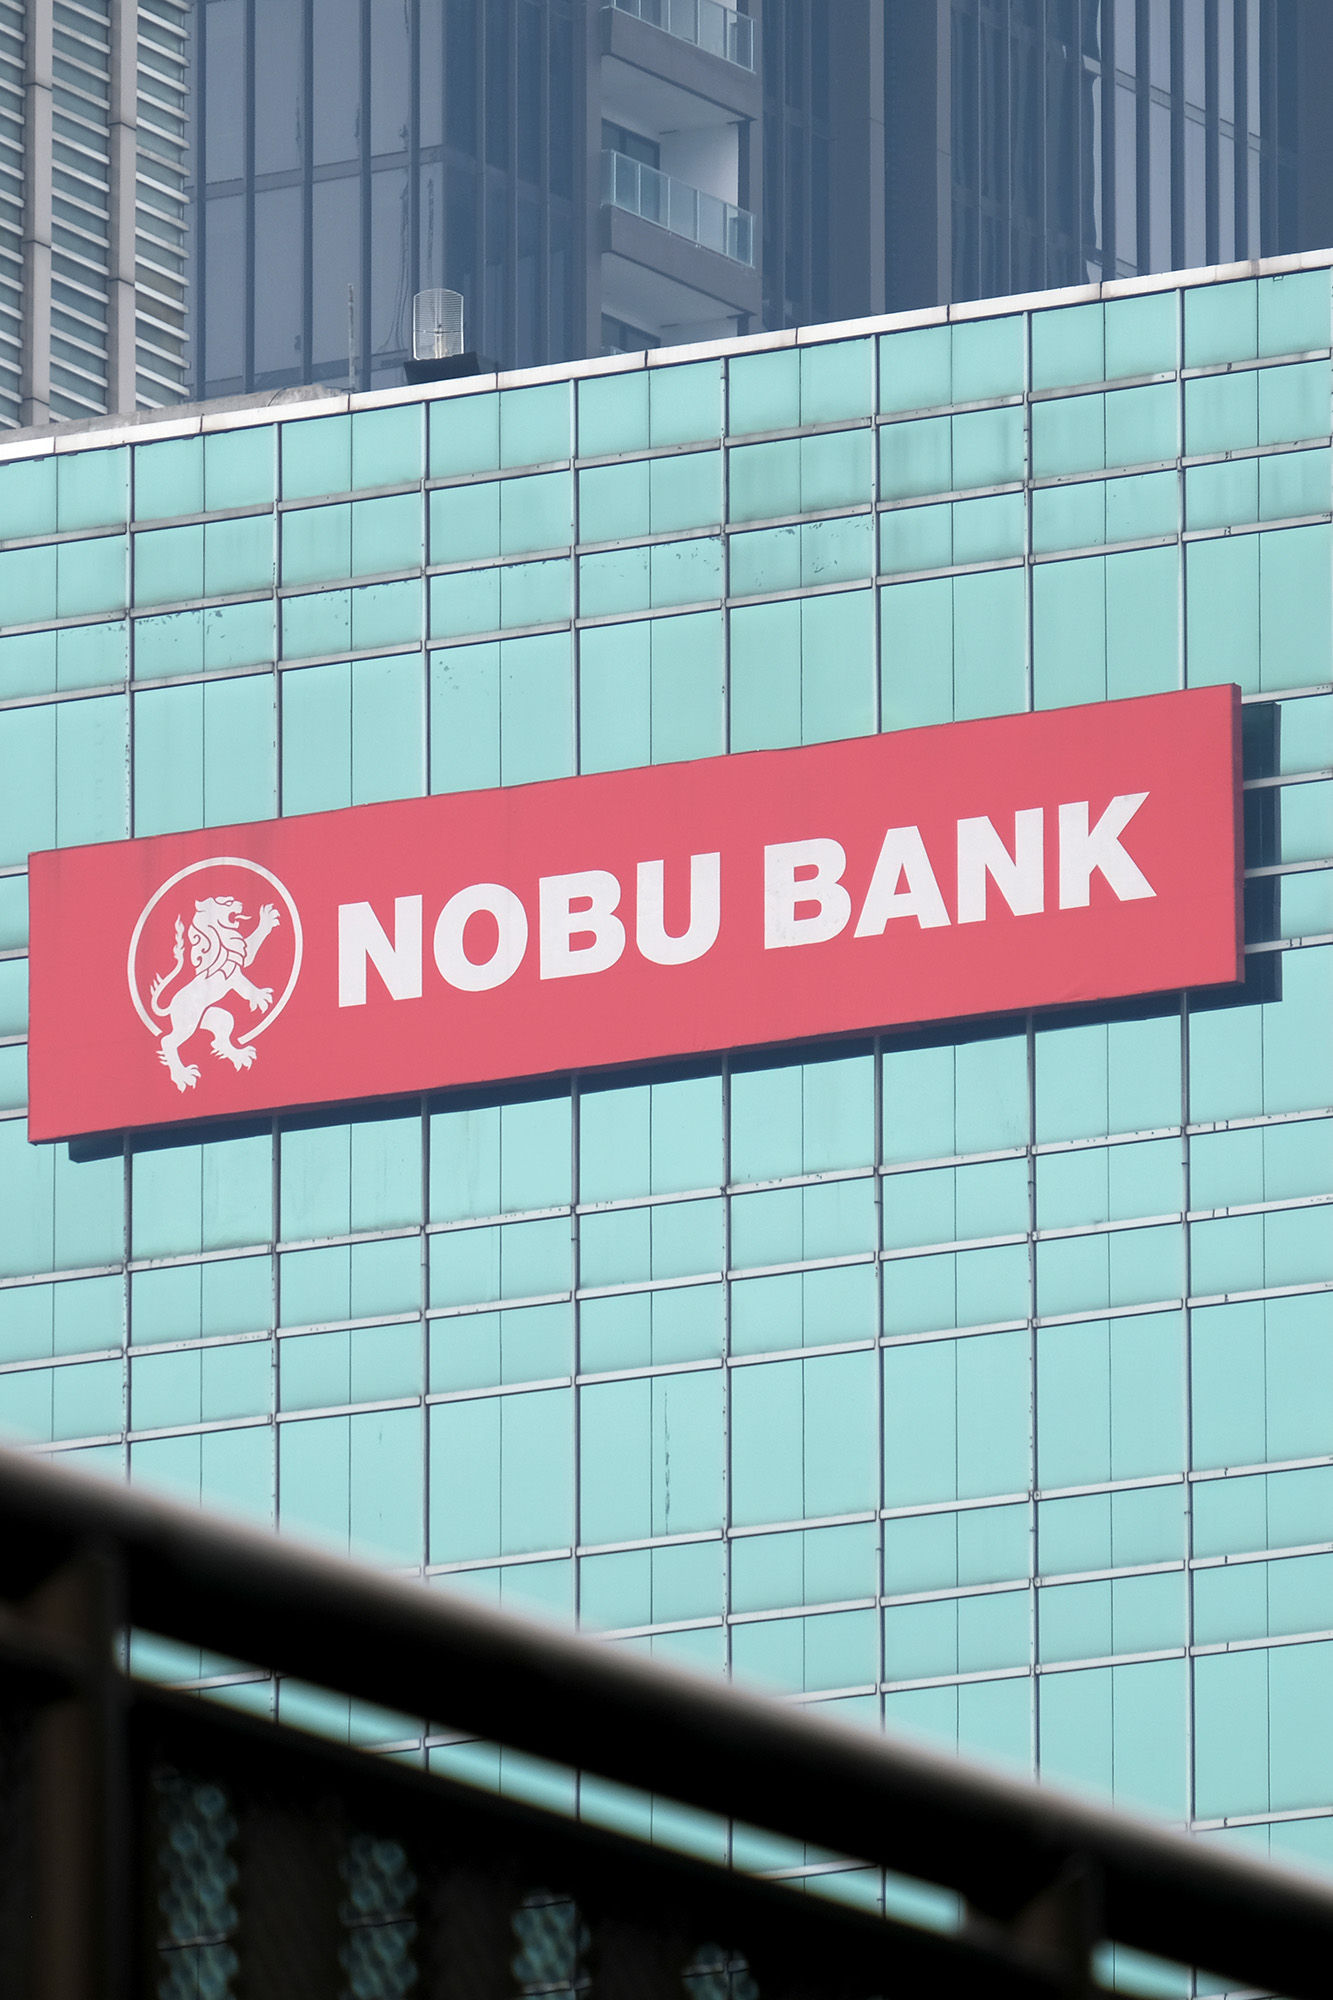 Kantor Nobu Bank di kawsan Semanggi, Jakarta. Foto: Ismail Pohan/TrenAsia